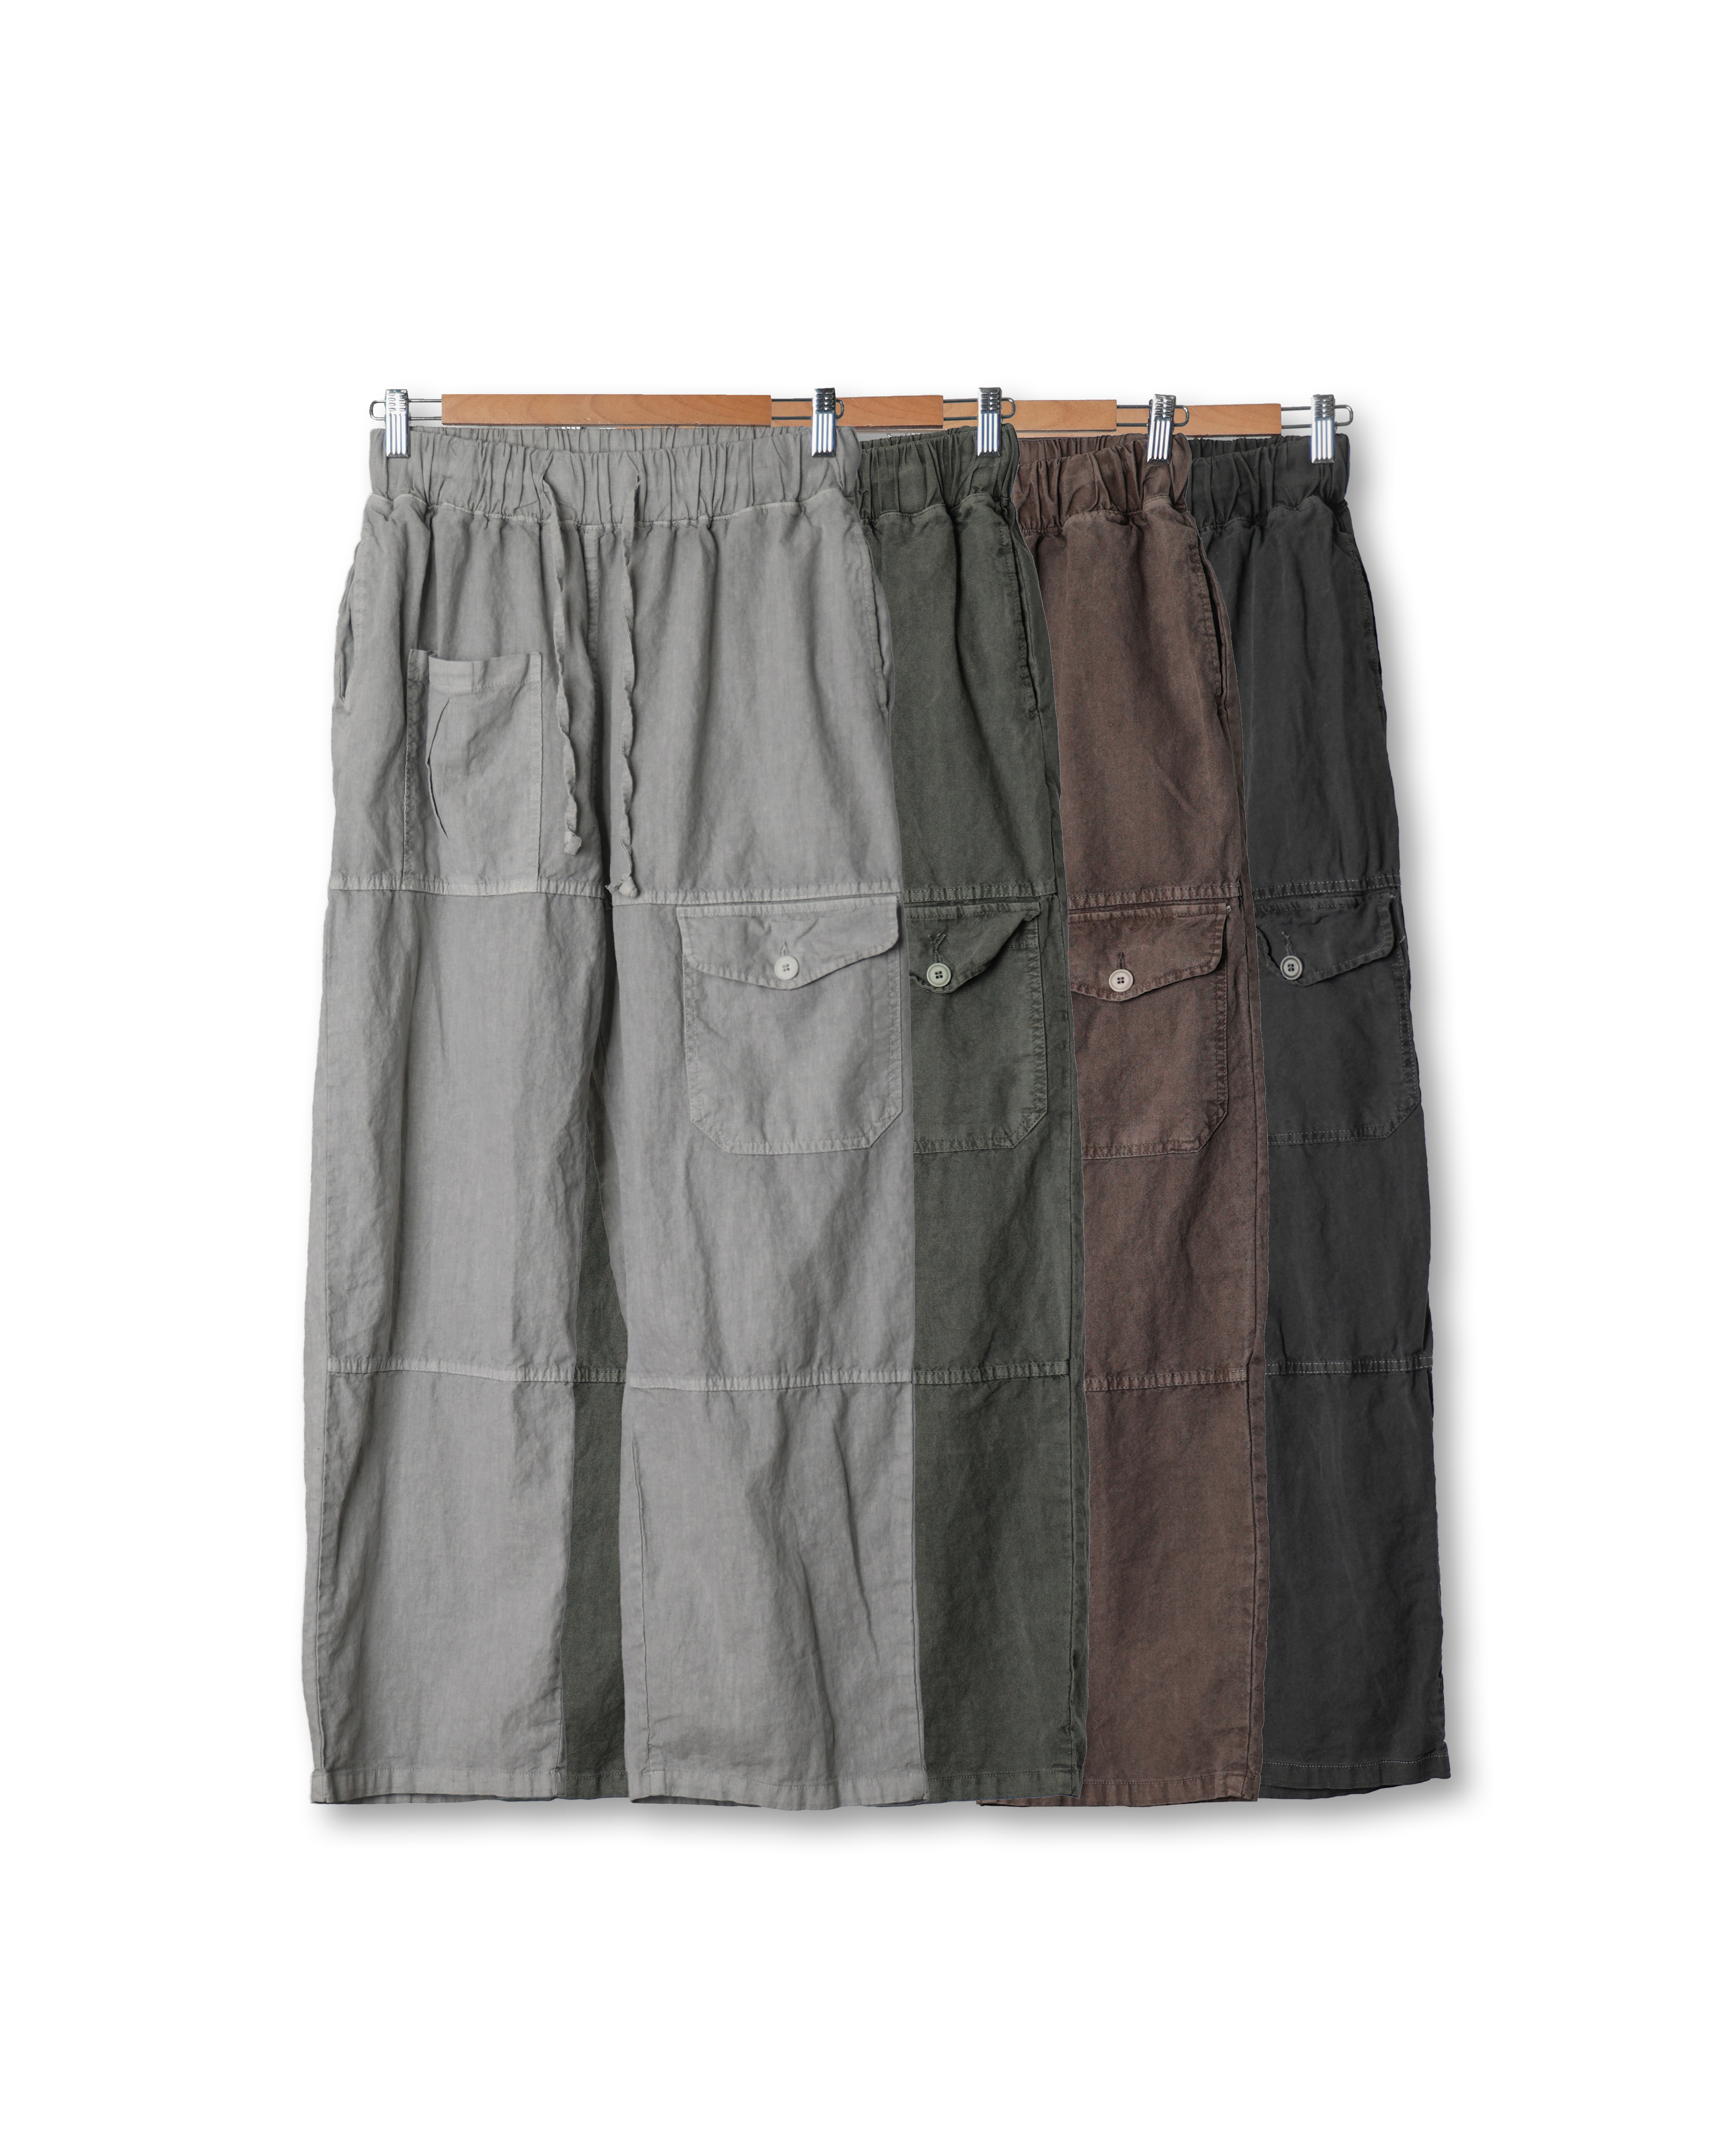 GAUZ MAFI Linen Washed Pocket Pants (Charcoal/Gray/Brown/Olive)